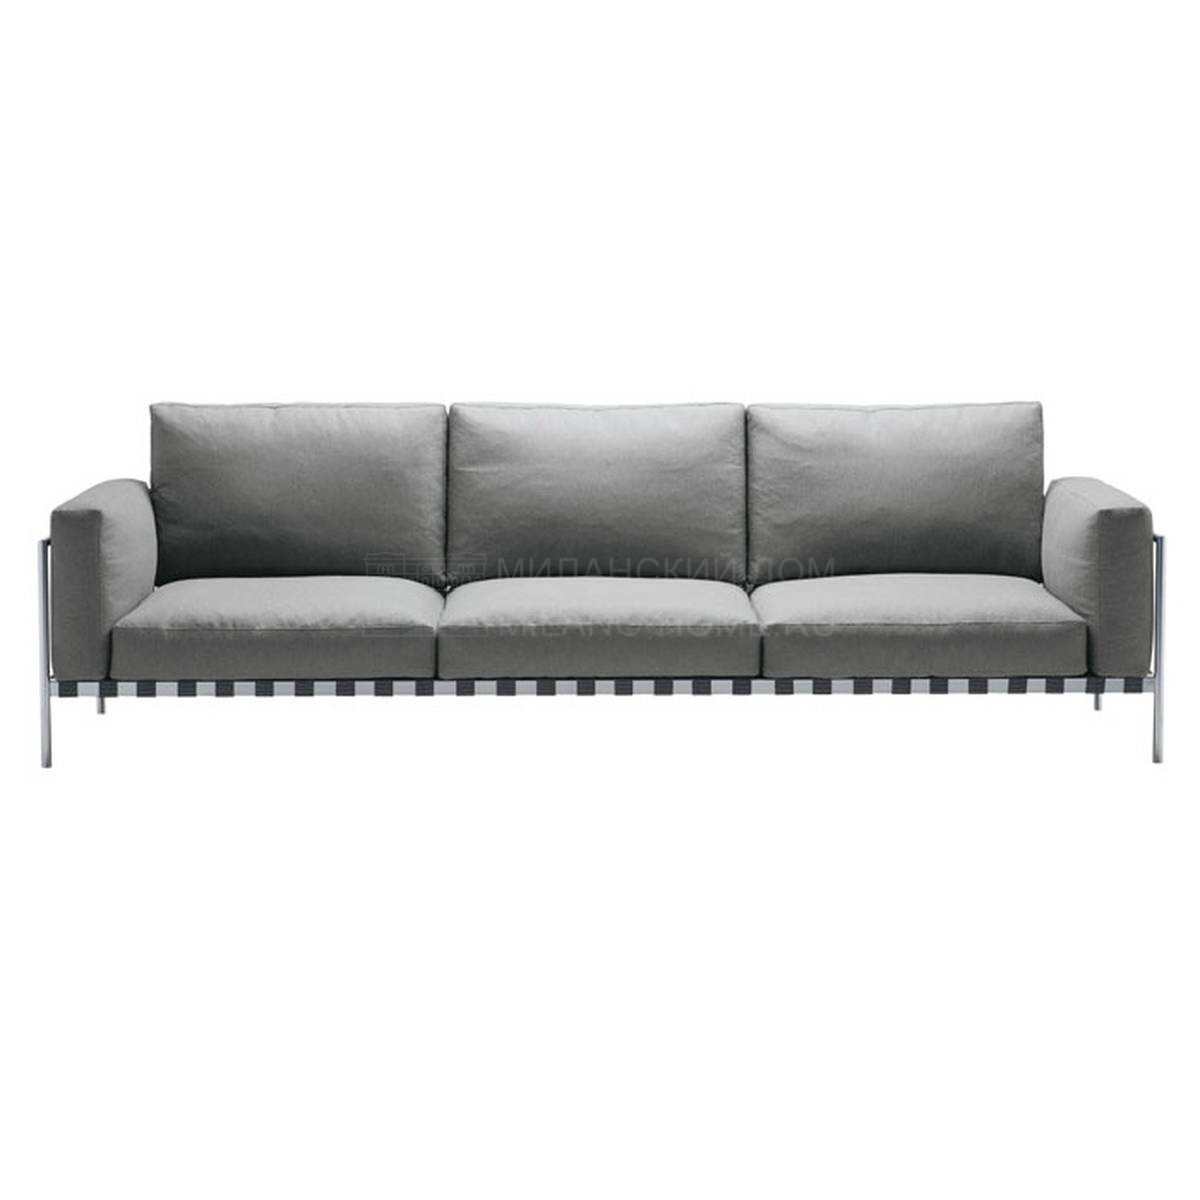 Прямой диван Parco sofa из Италии фабрики ZANOTTA